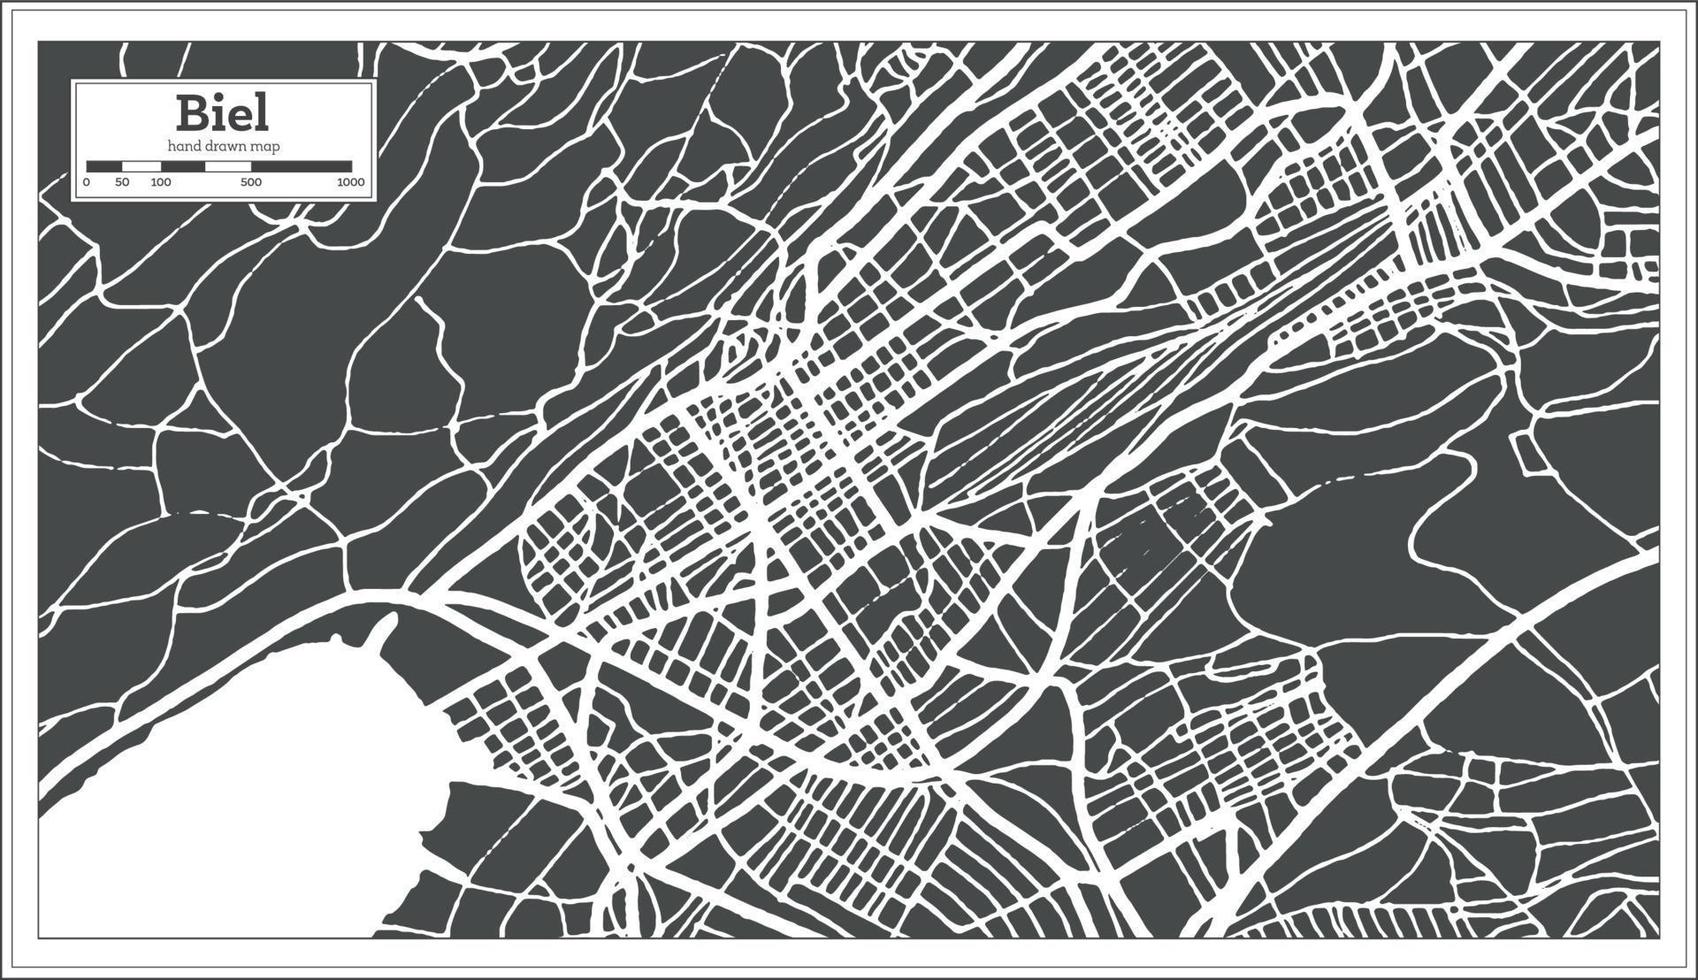 biel Svizzera città carta geografica nel retrò stile. schema carta geografica. vettore